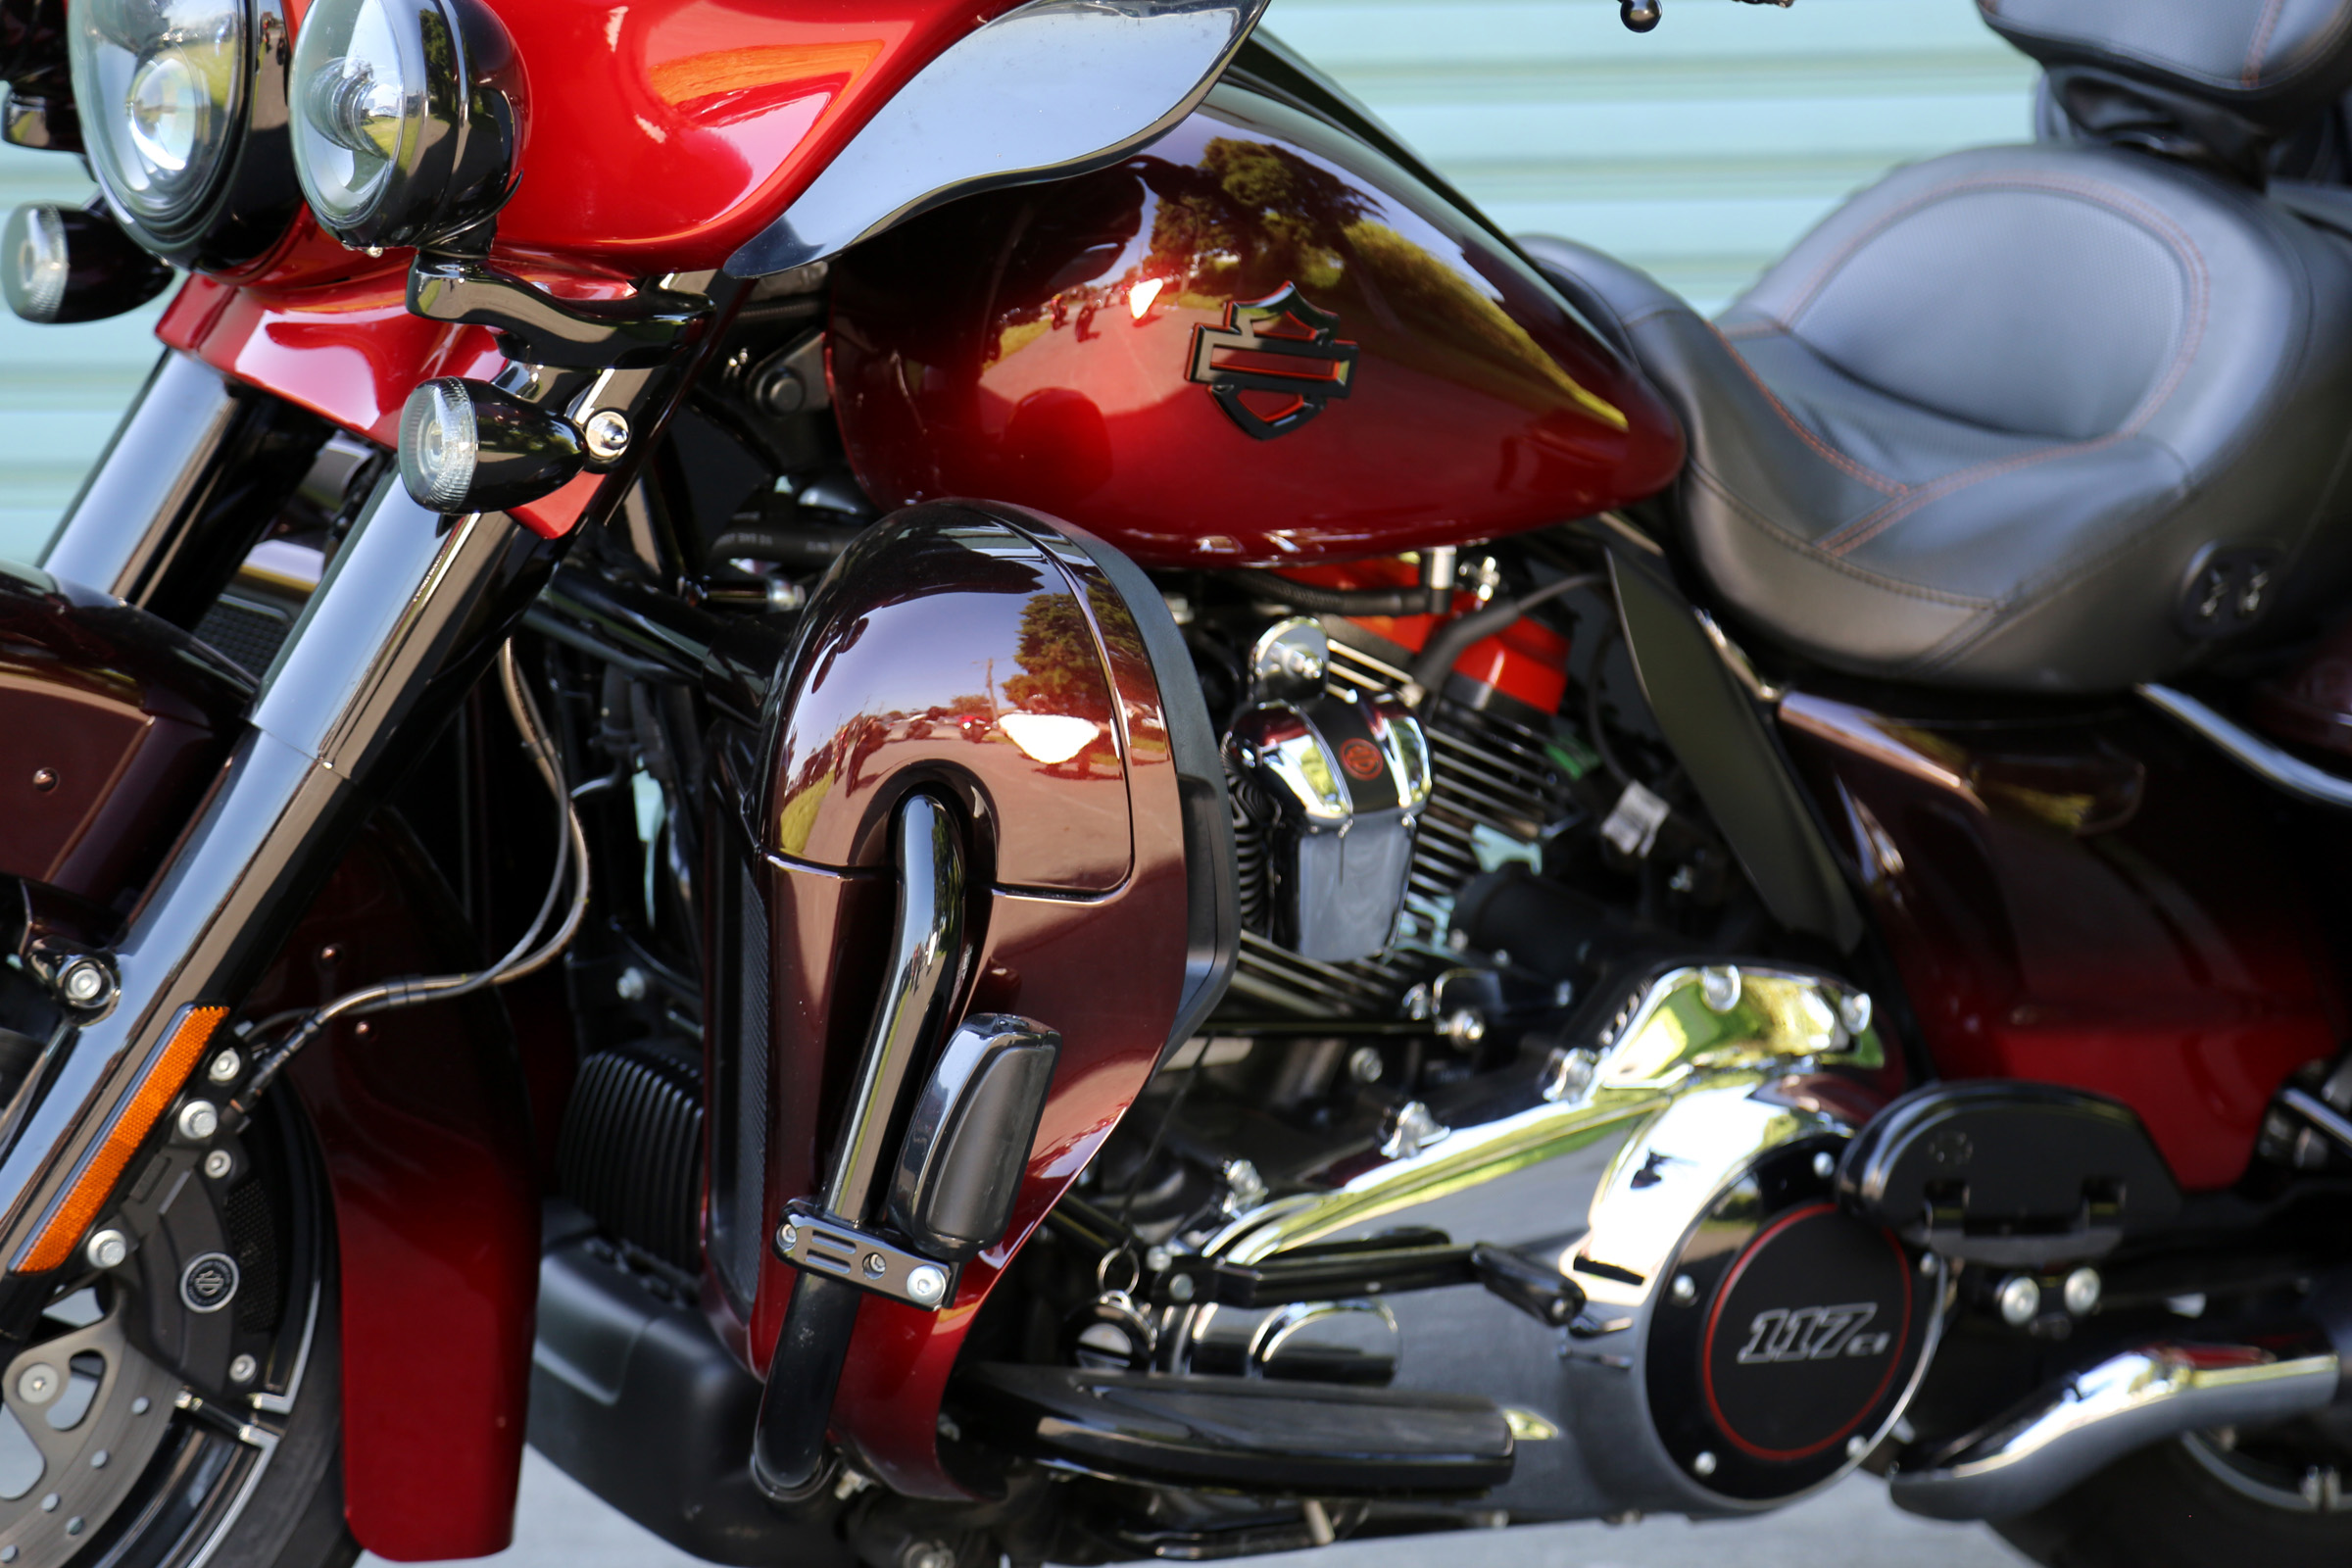 2018 Harley Davidson CVO Limited 117 detail28